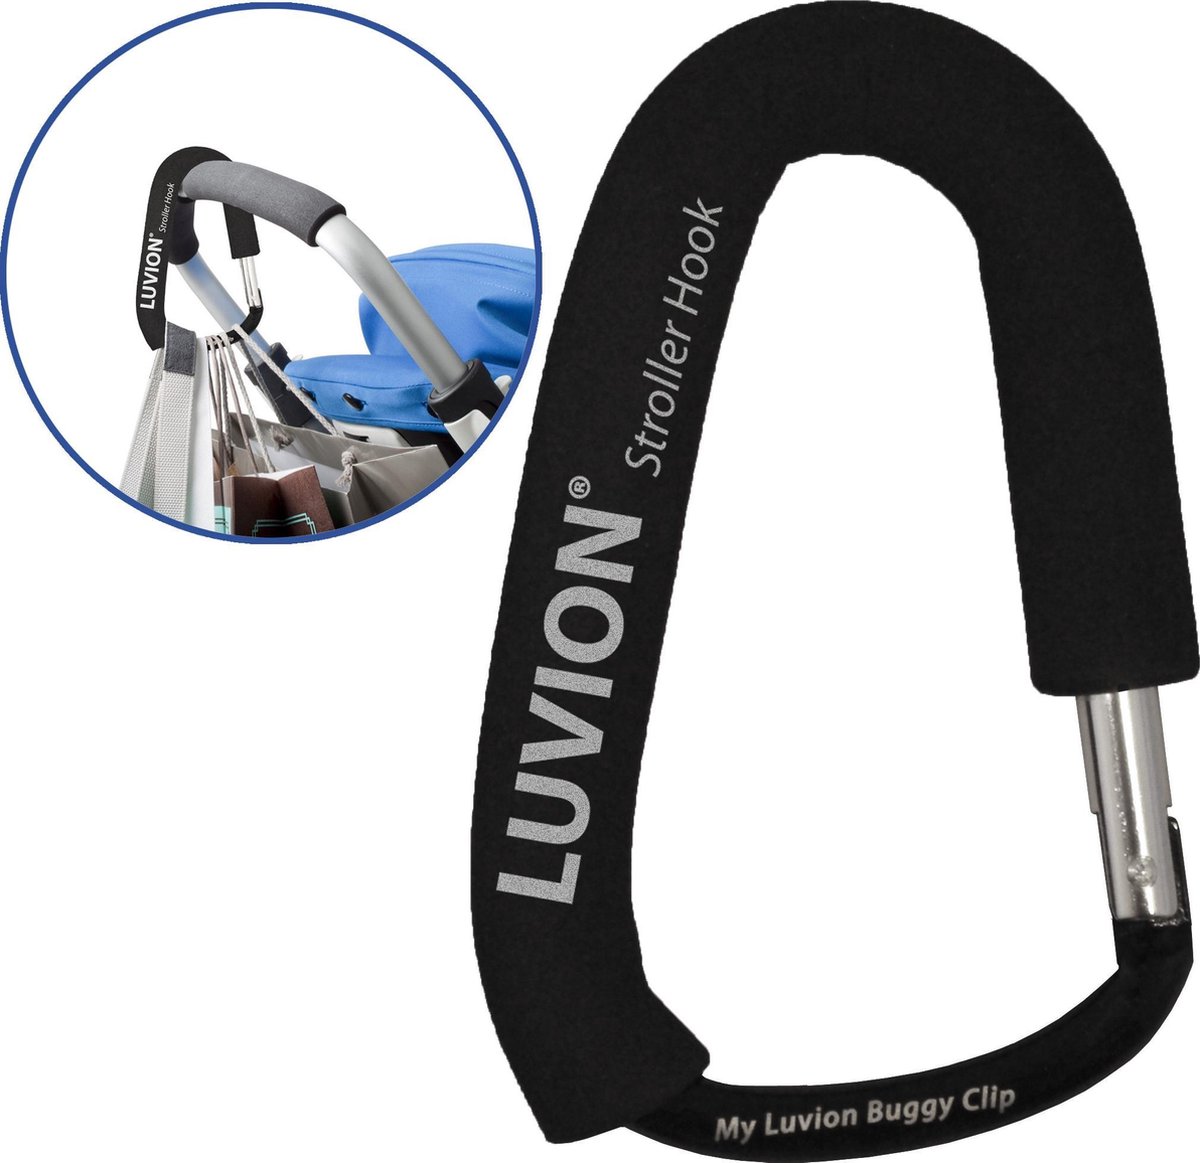 LUVION® - Buggy haak / Kinderwagen tassenhaak - Luvion